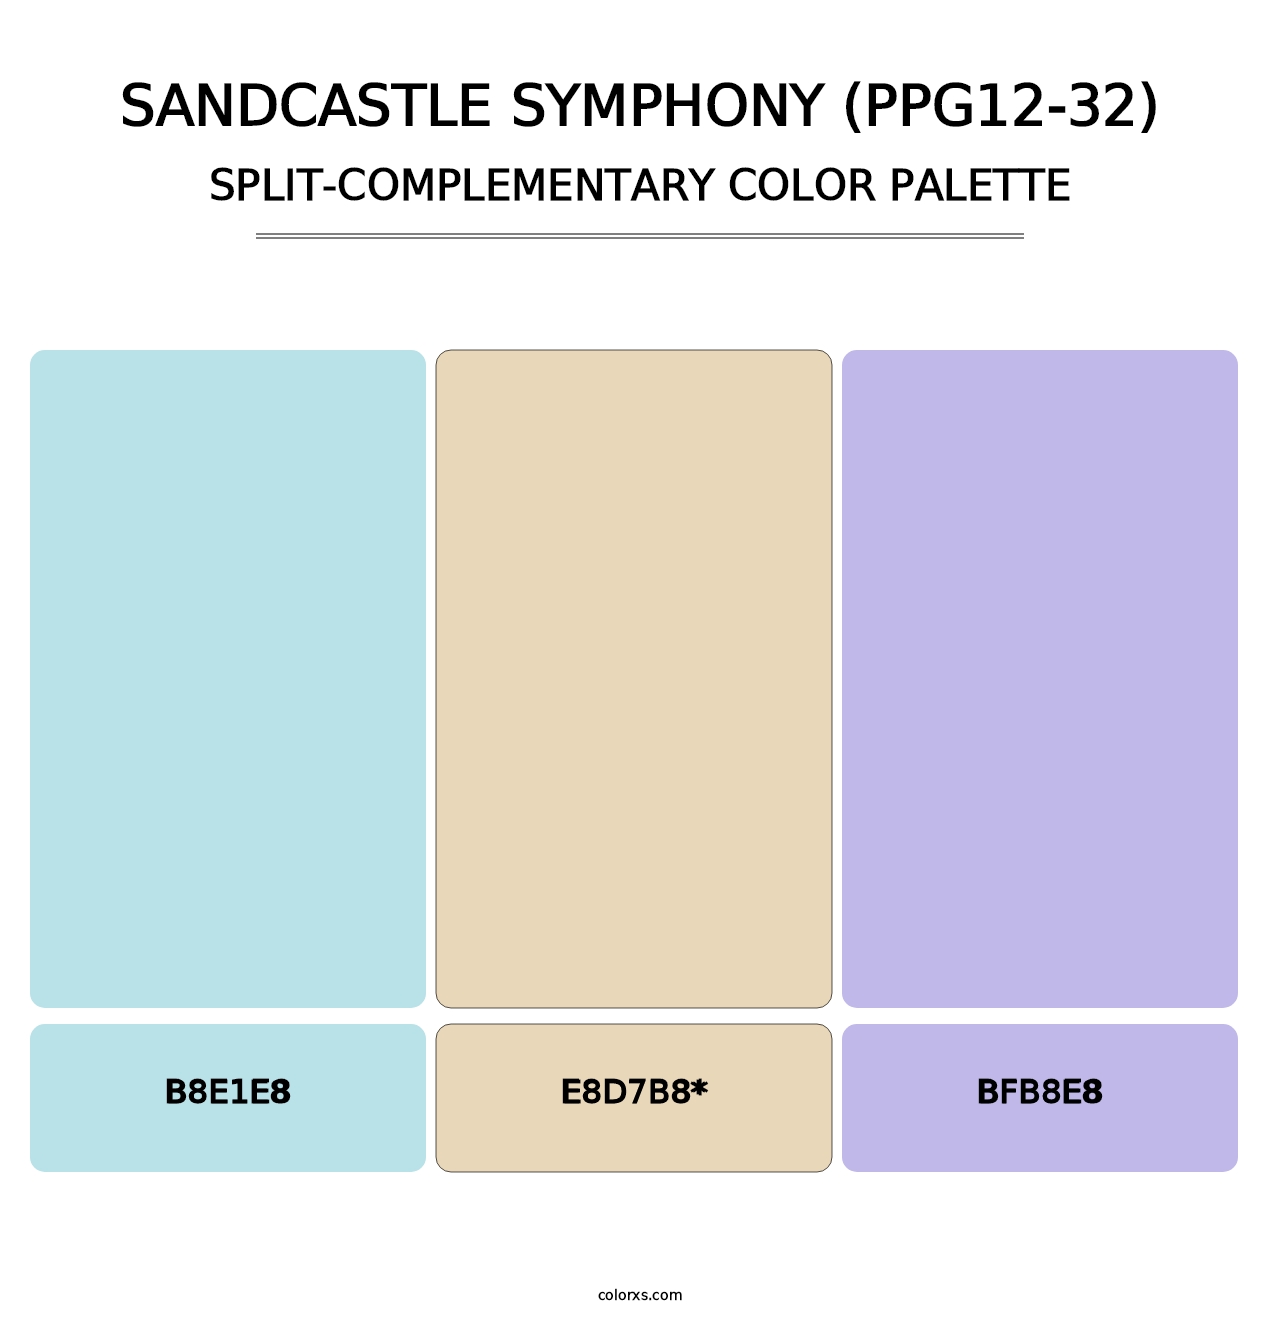 Sandcastle Symphony (PPG12-32) - Split-Complementary Color Palette